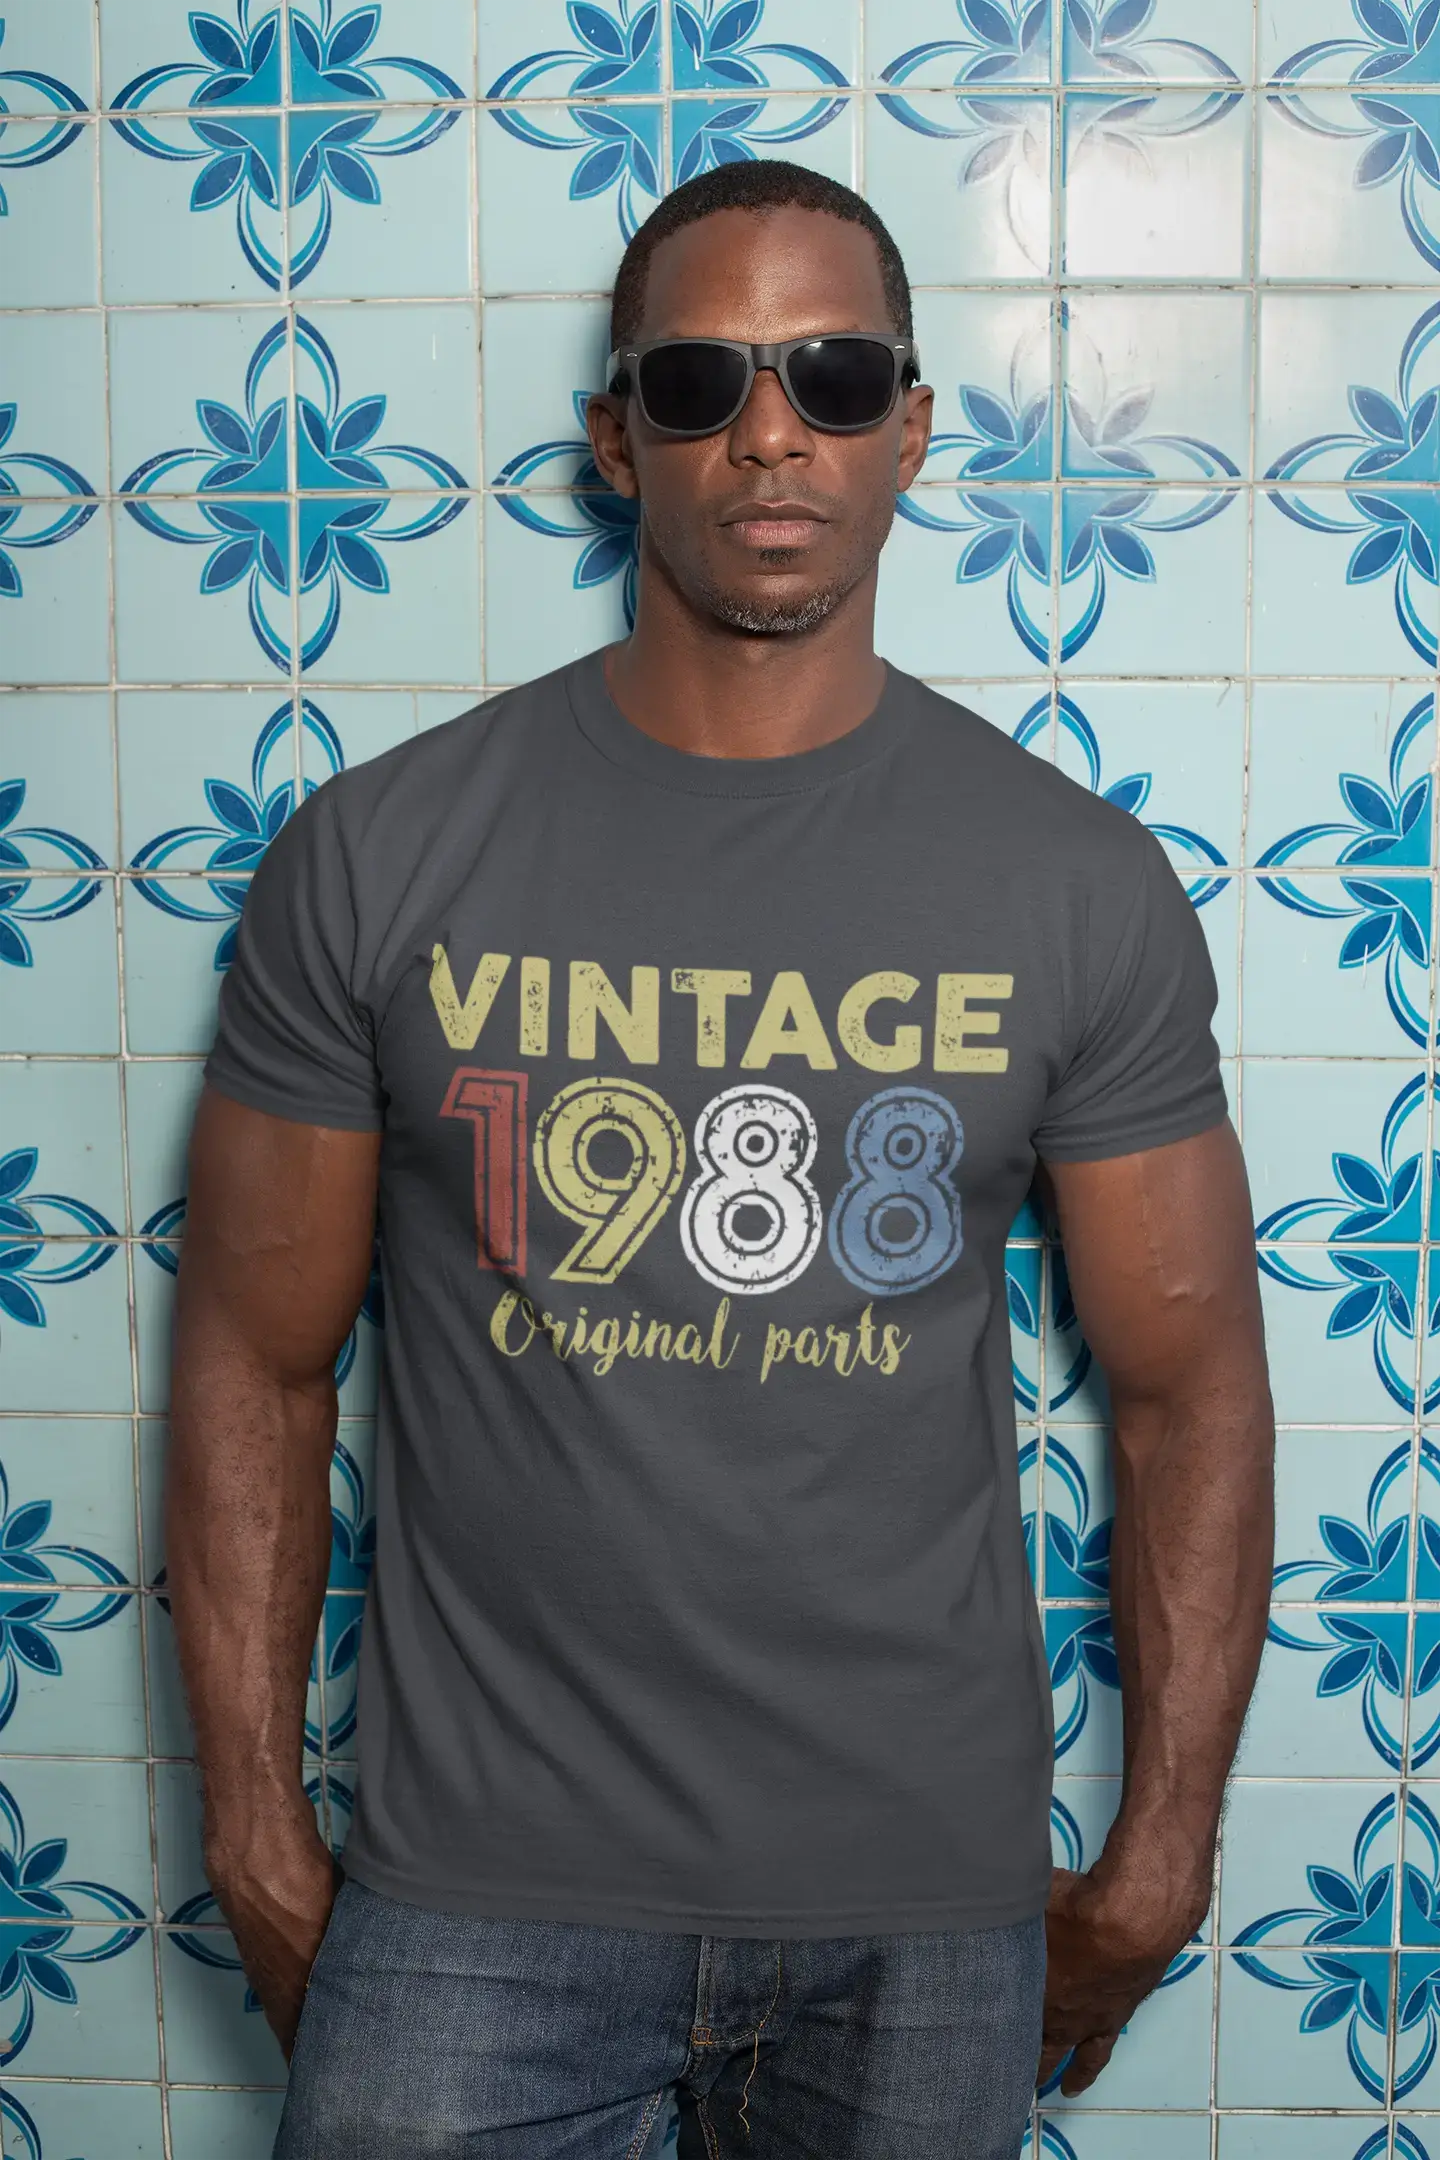 ULTRABASIC - Graphic Printed Men's Vintage 1988 T-Shirt Denim